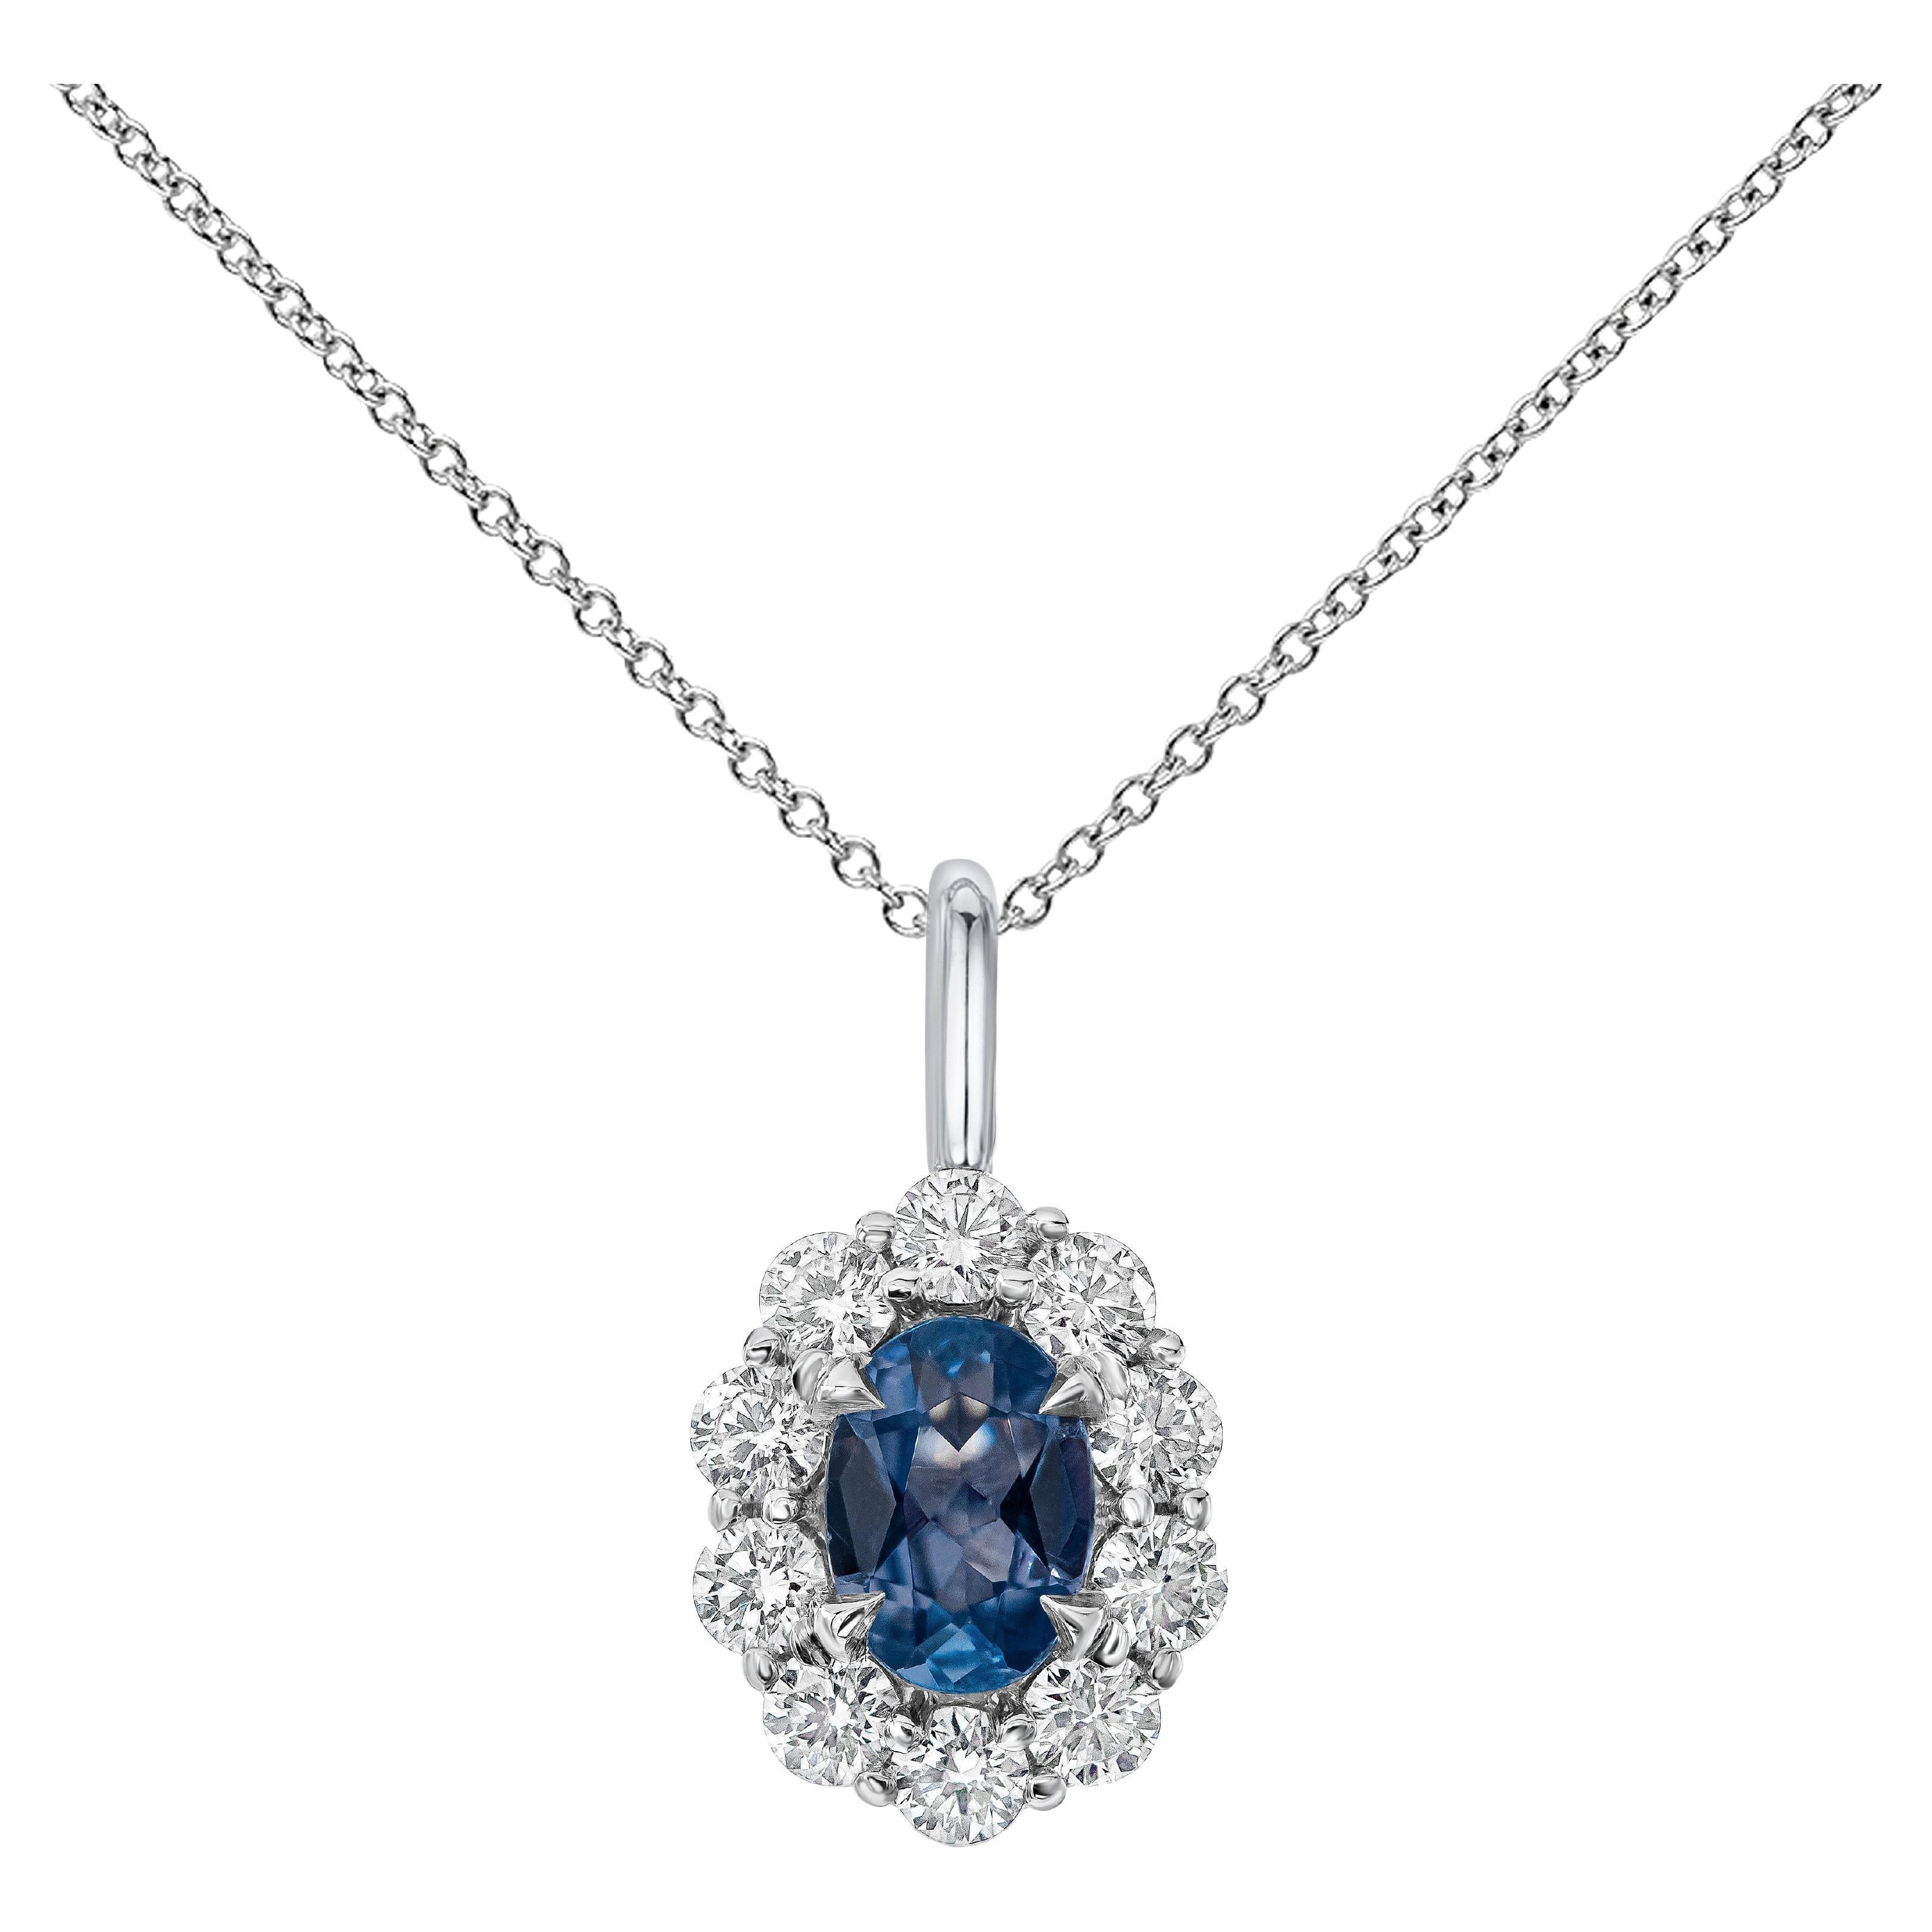 Roman Malakov 0.38 Carat Oval Cut Sapphire with Diamond Halo Pendant Necklace